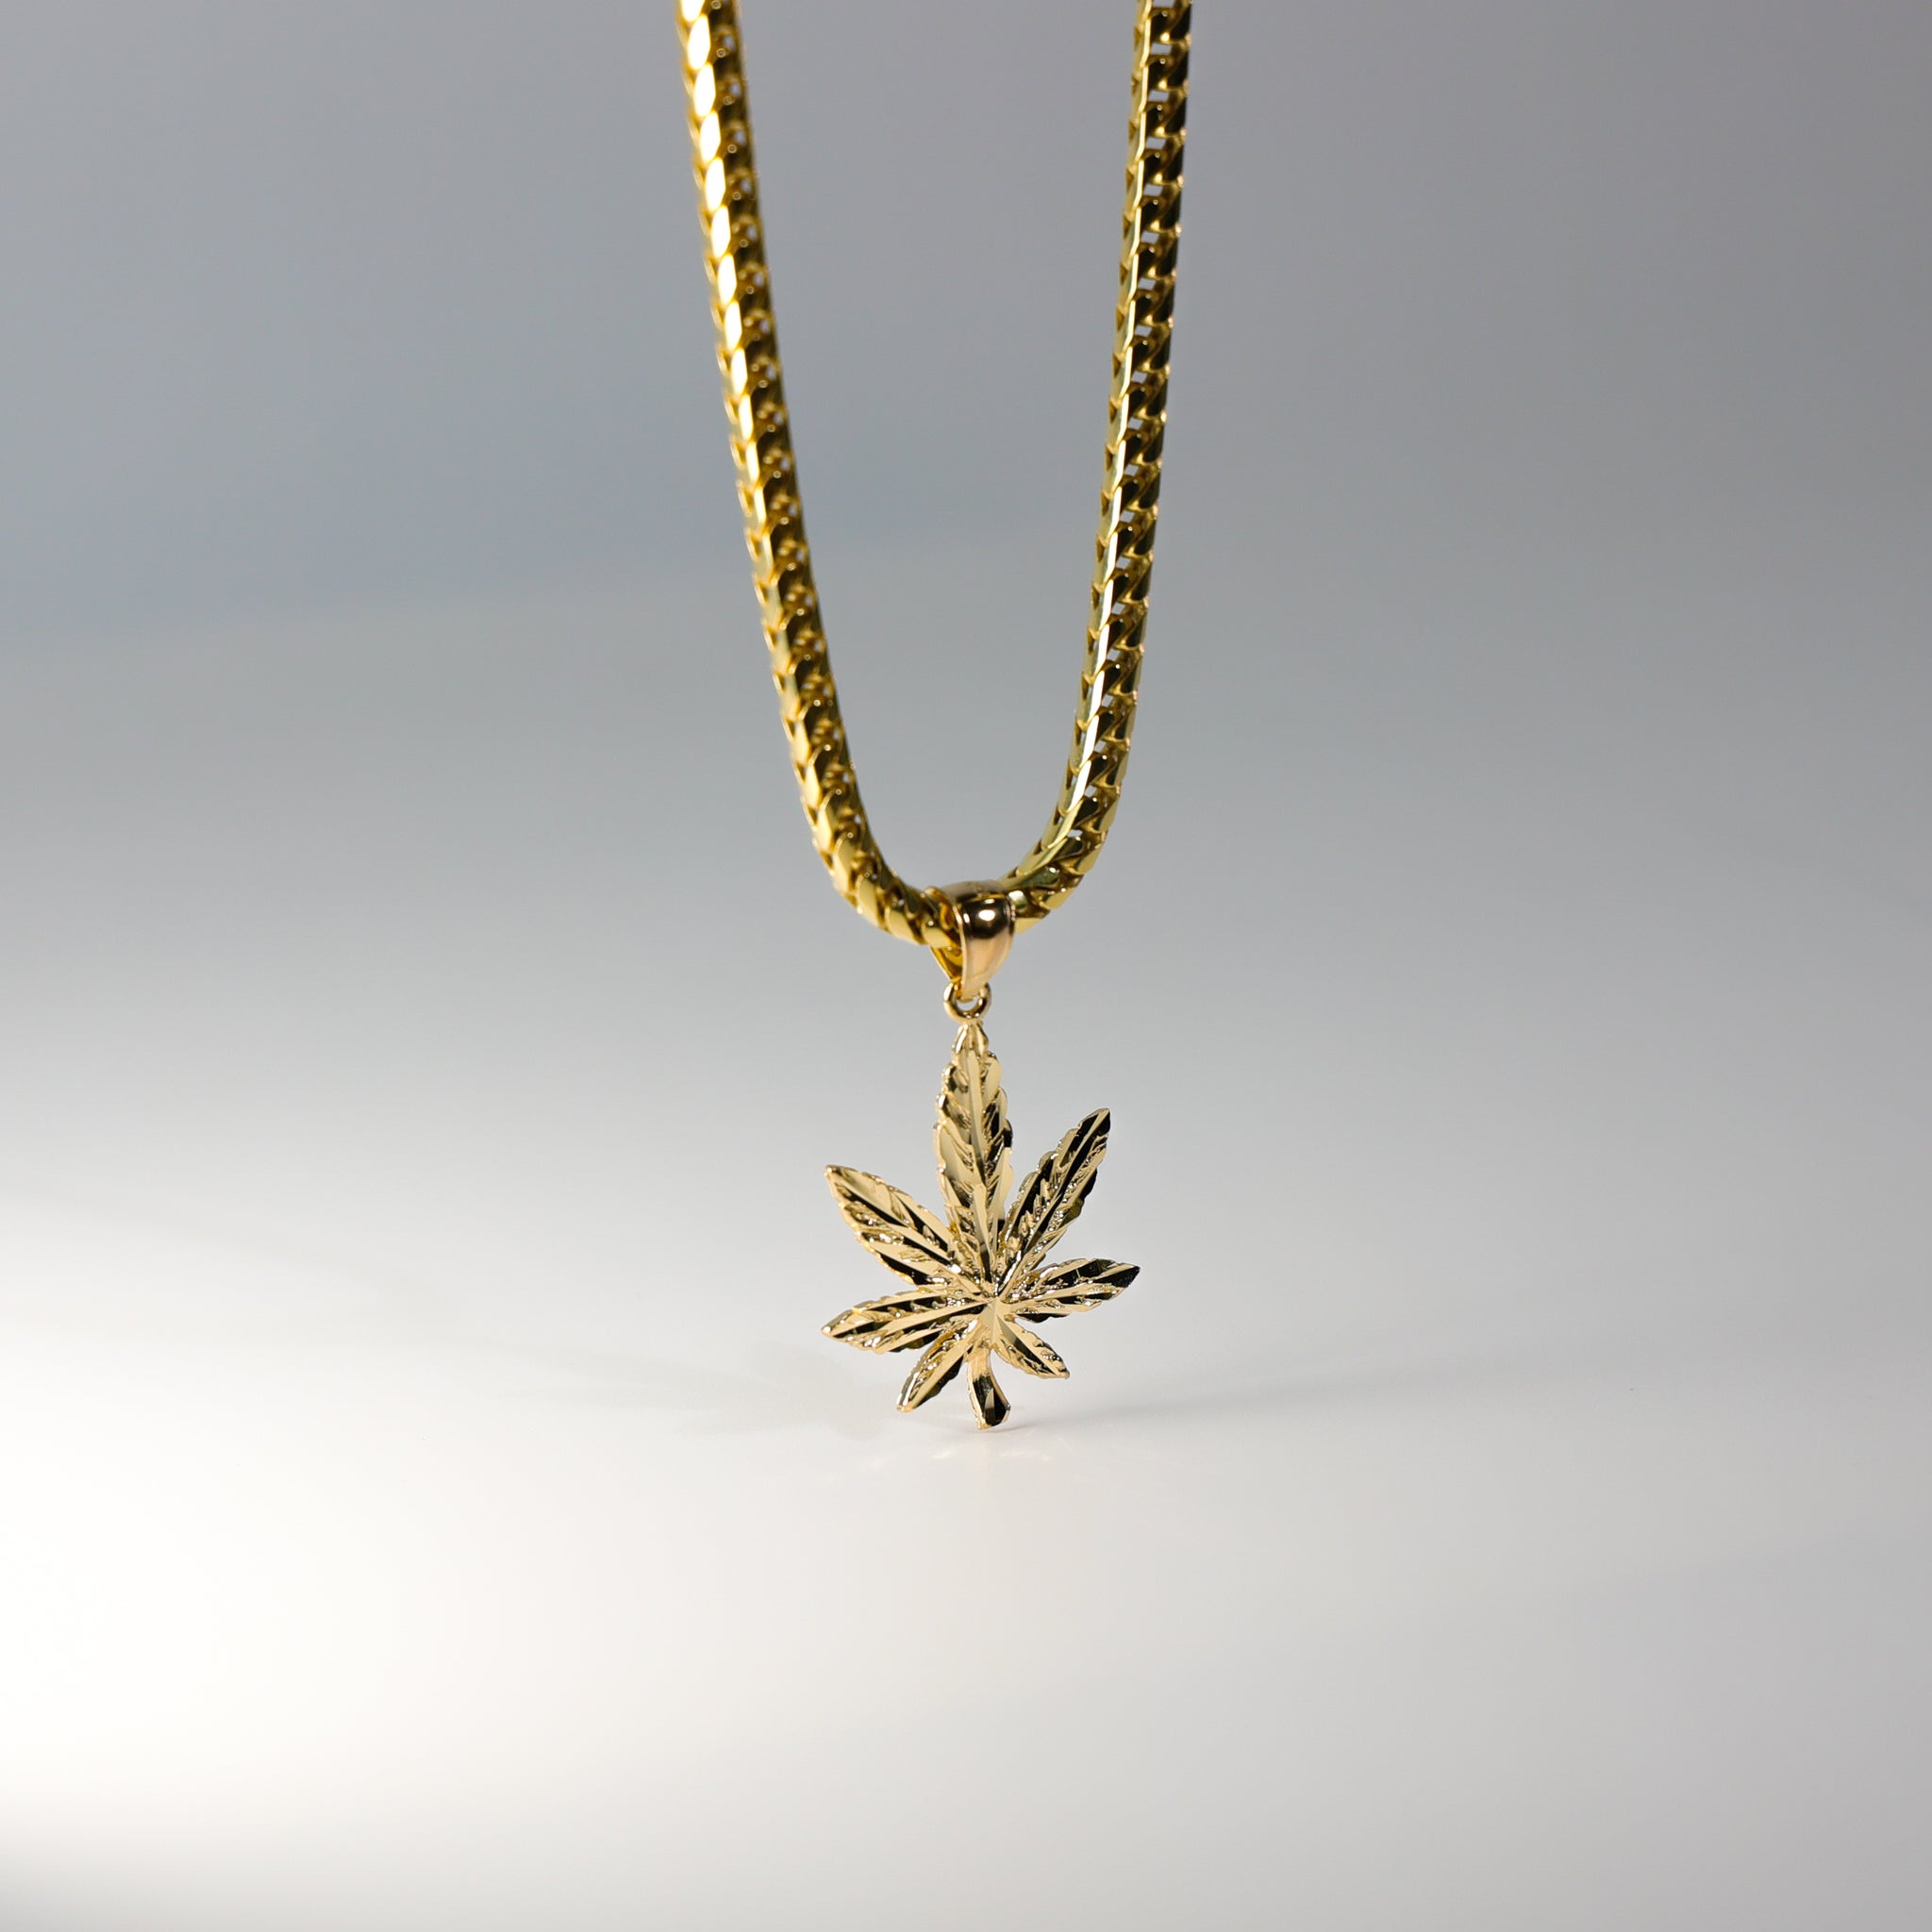 Gold Marijuana Leaf Pendant Model-1569 - Charlie & Co. Jewelry